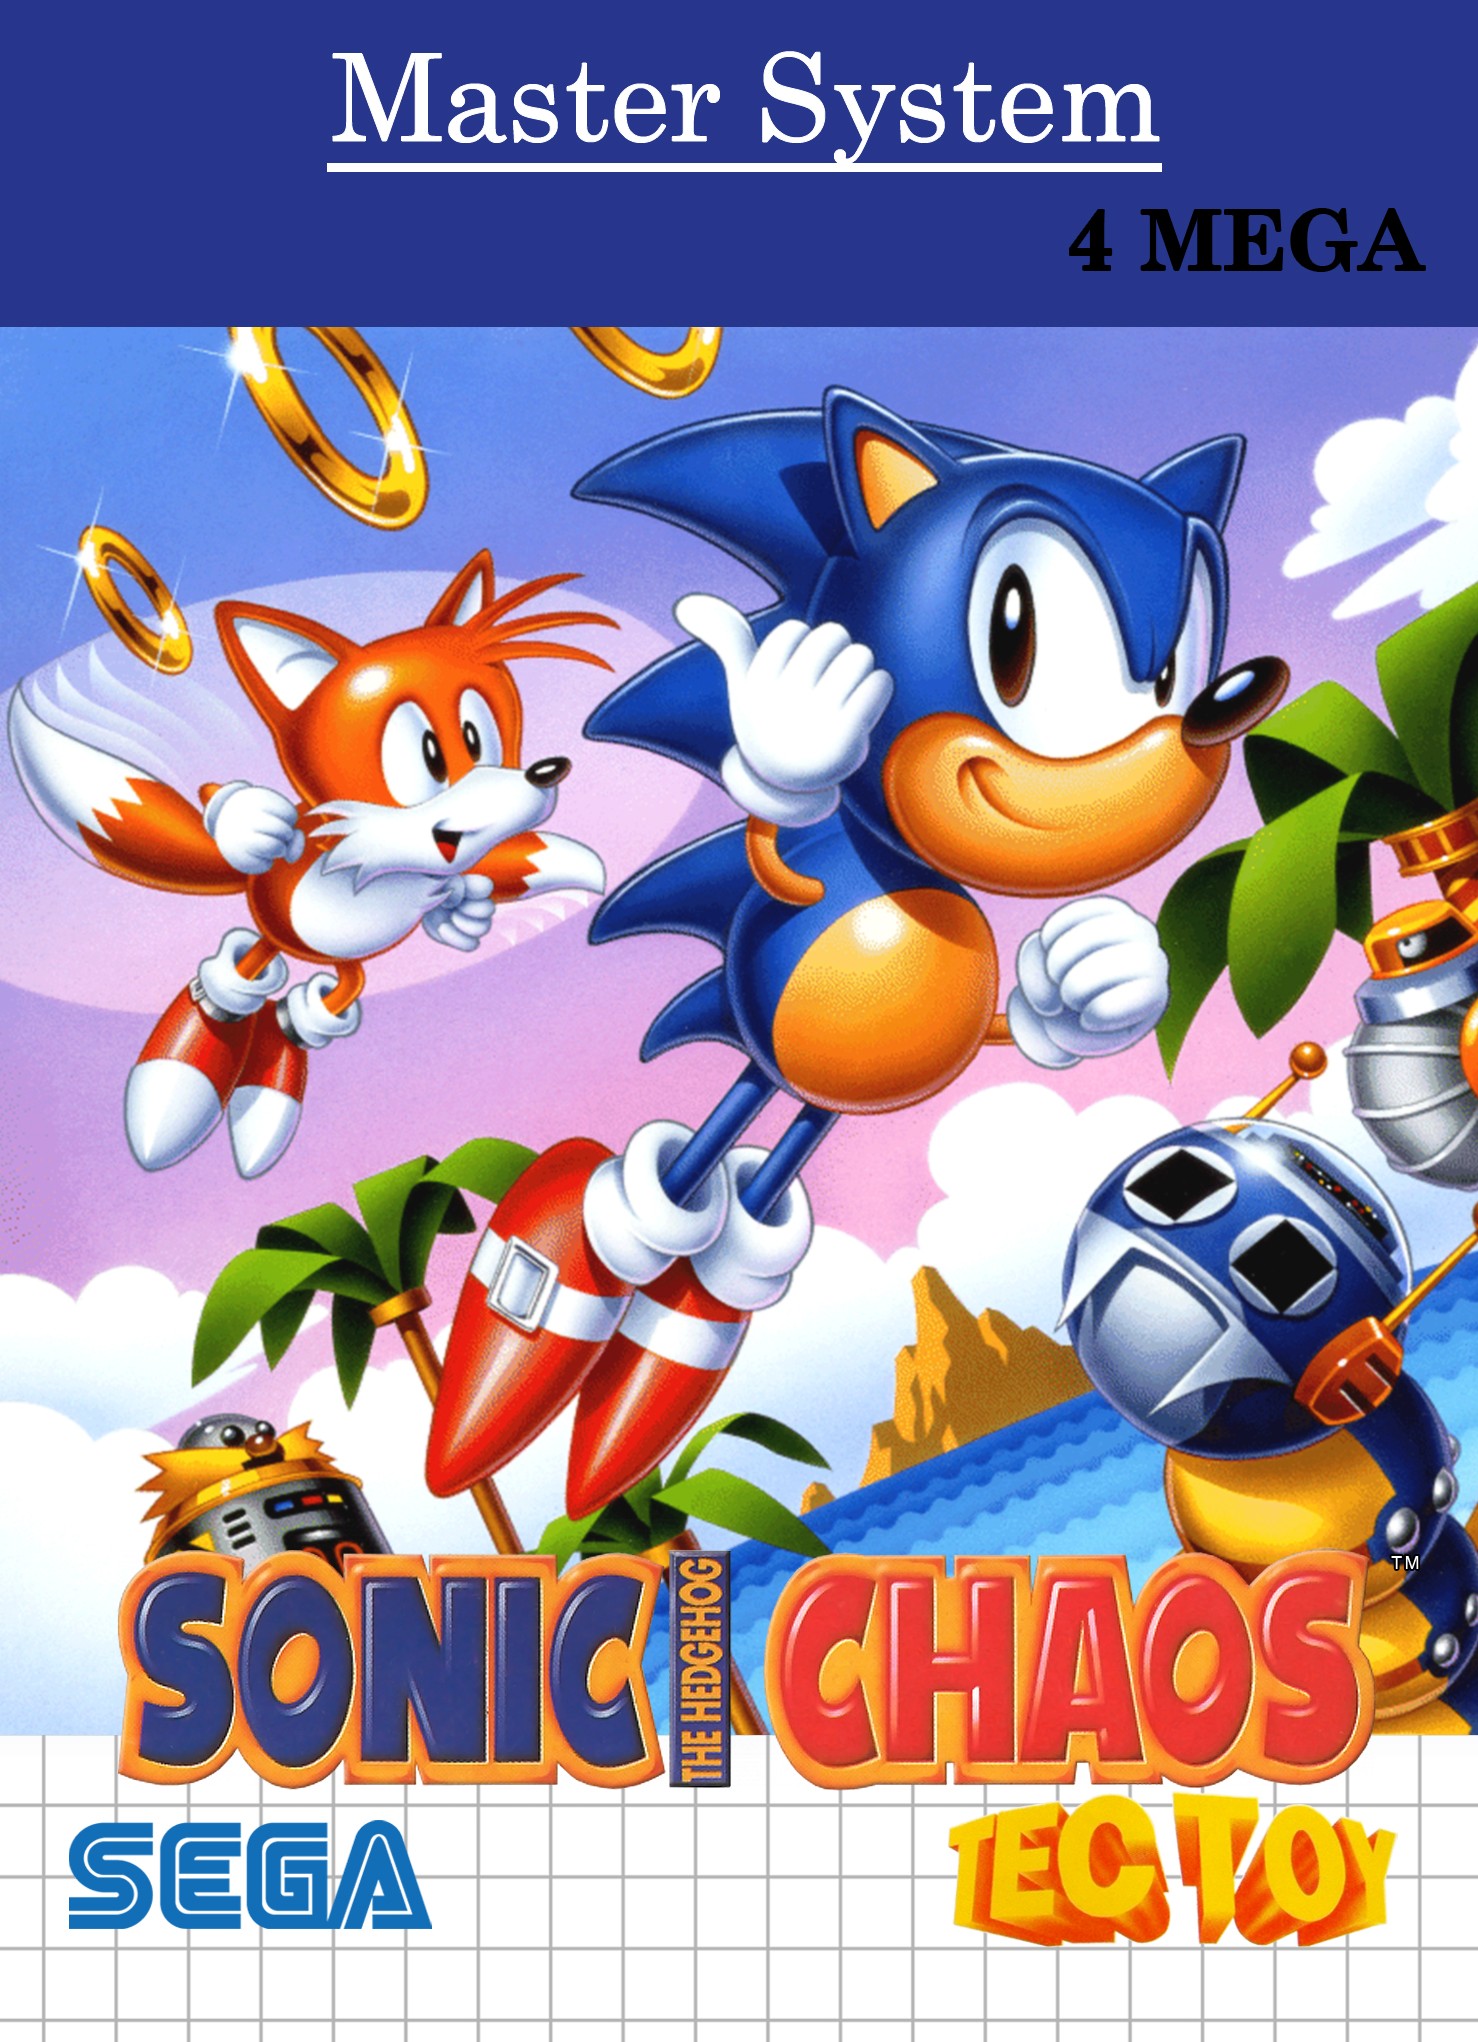 'Sonic the Hedgehog: Chaos'